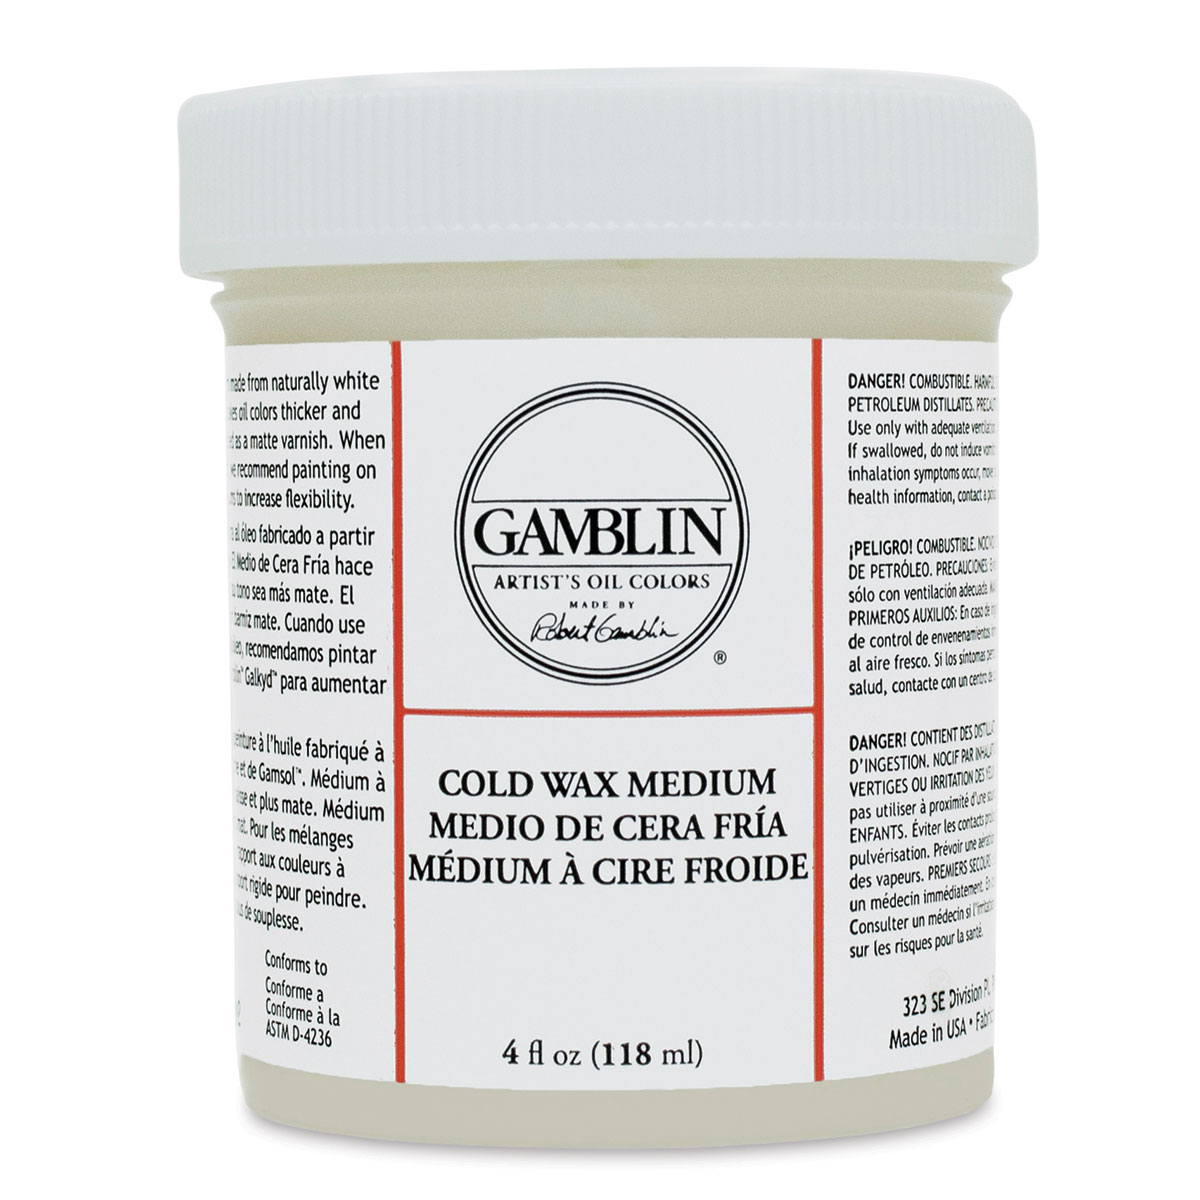 Make Cold Wax Medium 